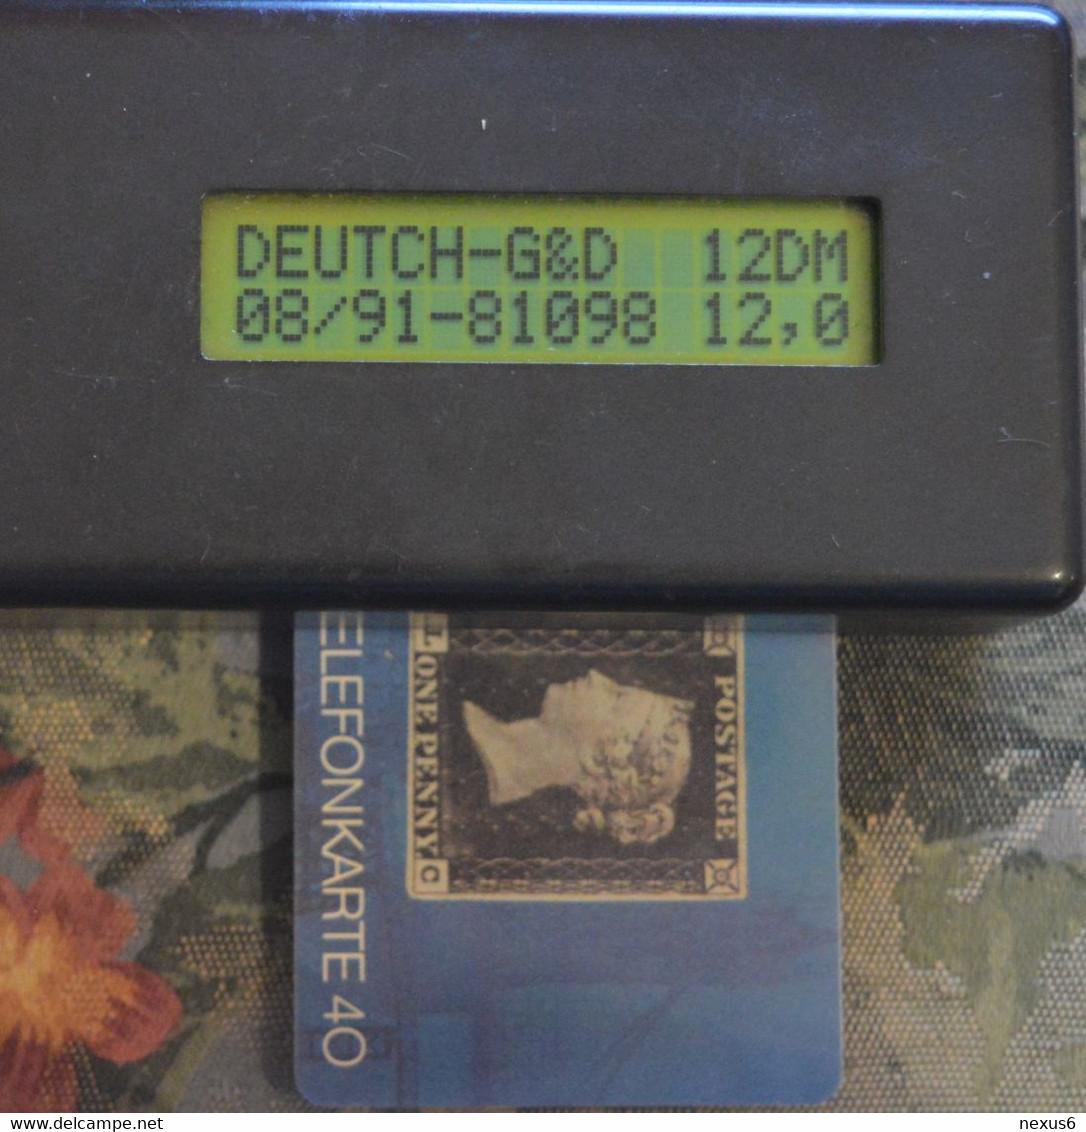 Germany - Briefmarken 1 - Schwarze Queen Viktoria - E 01-08.91 - 12DM/40Units, 30.000ex, Mint - E-Series : D. Postreklame Edition